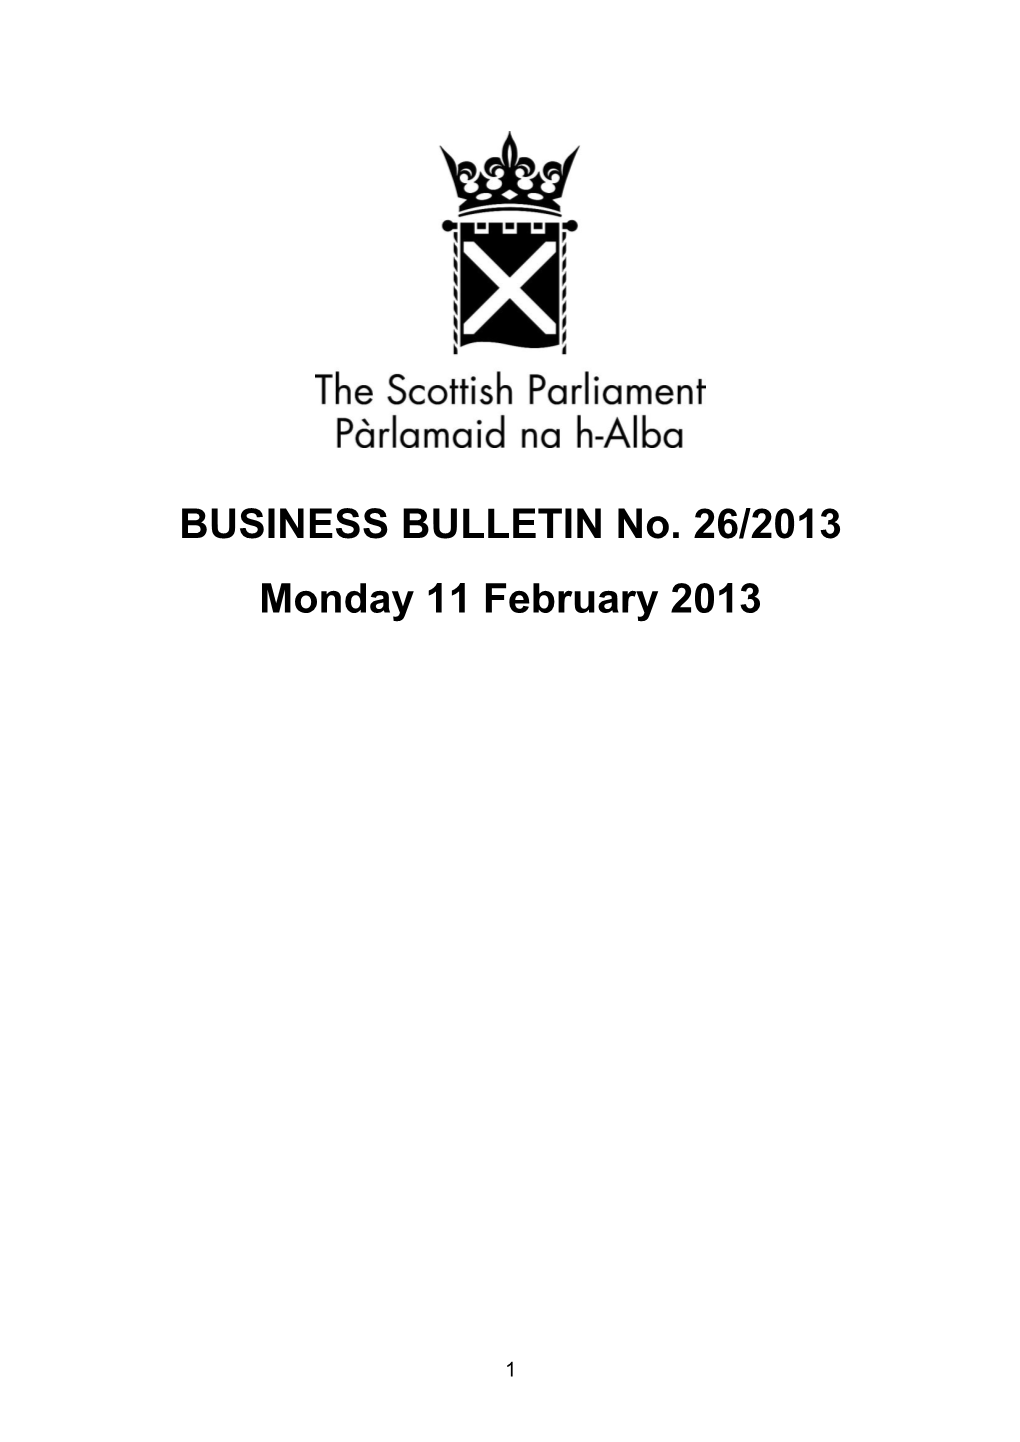 BUSINESS BULLETIN No. 26/2013 Monday 11 February 2013